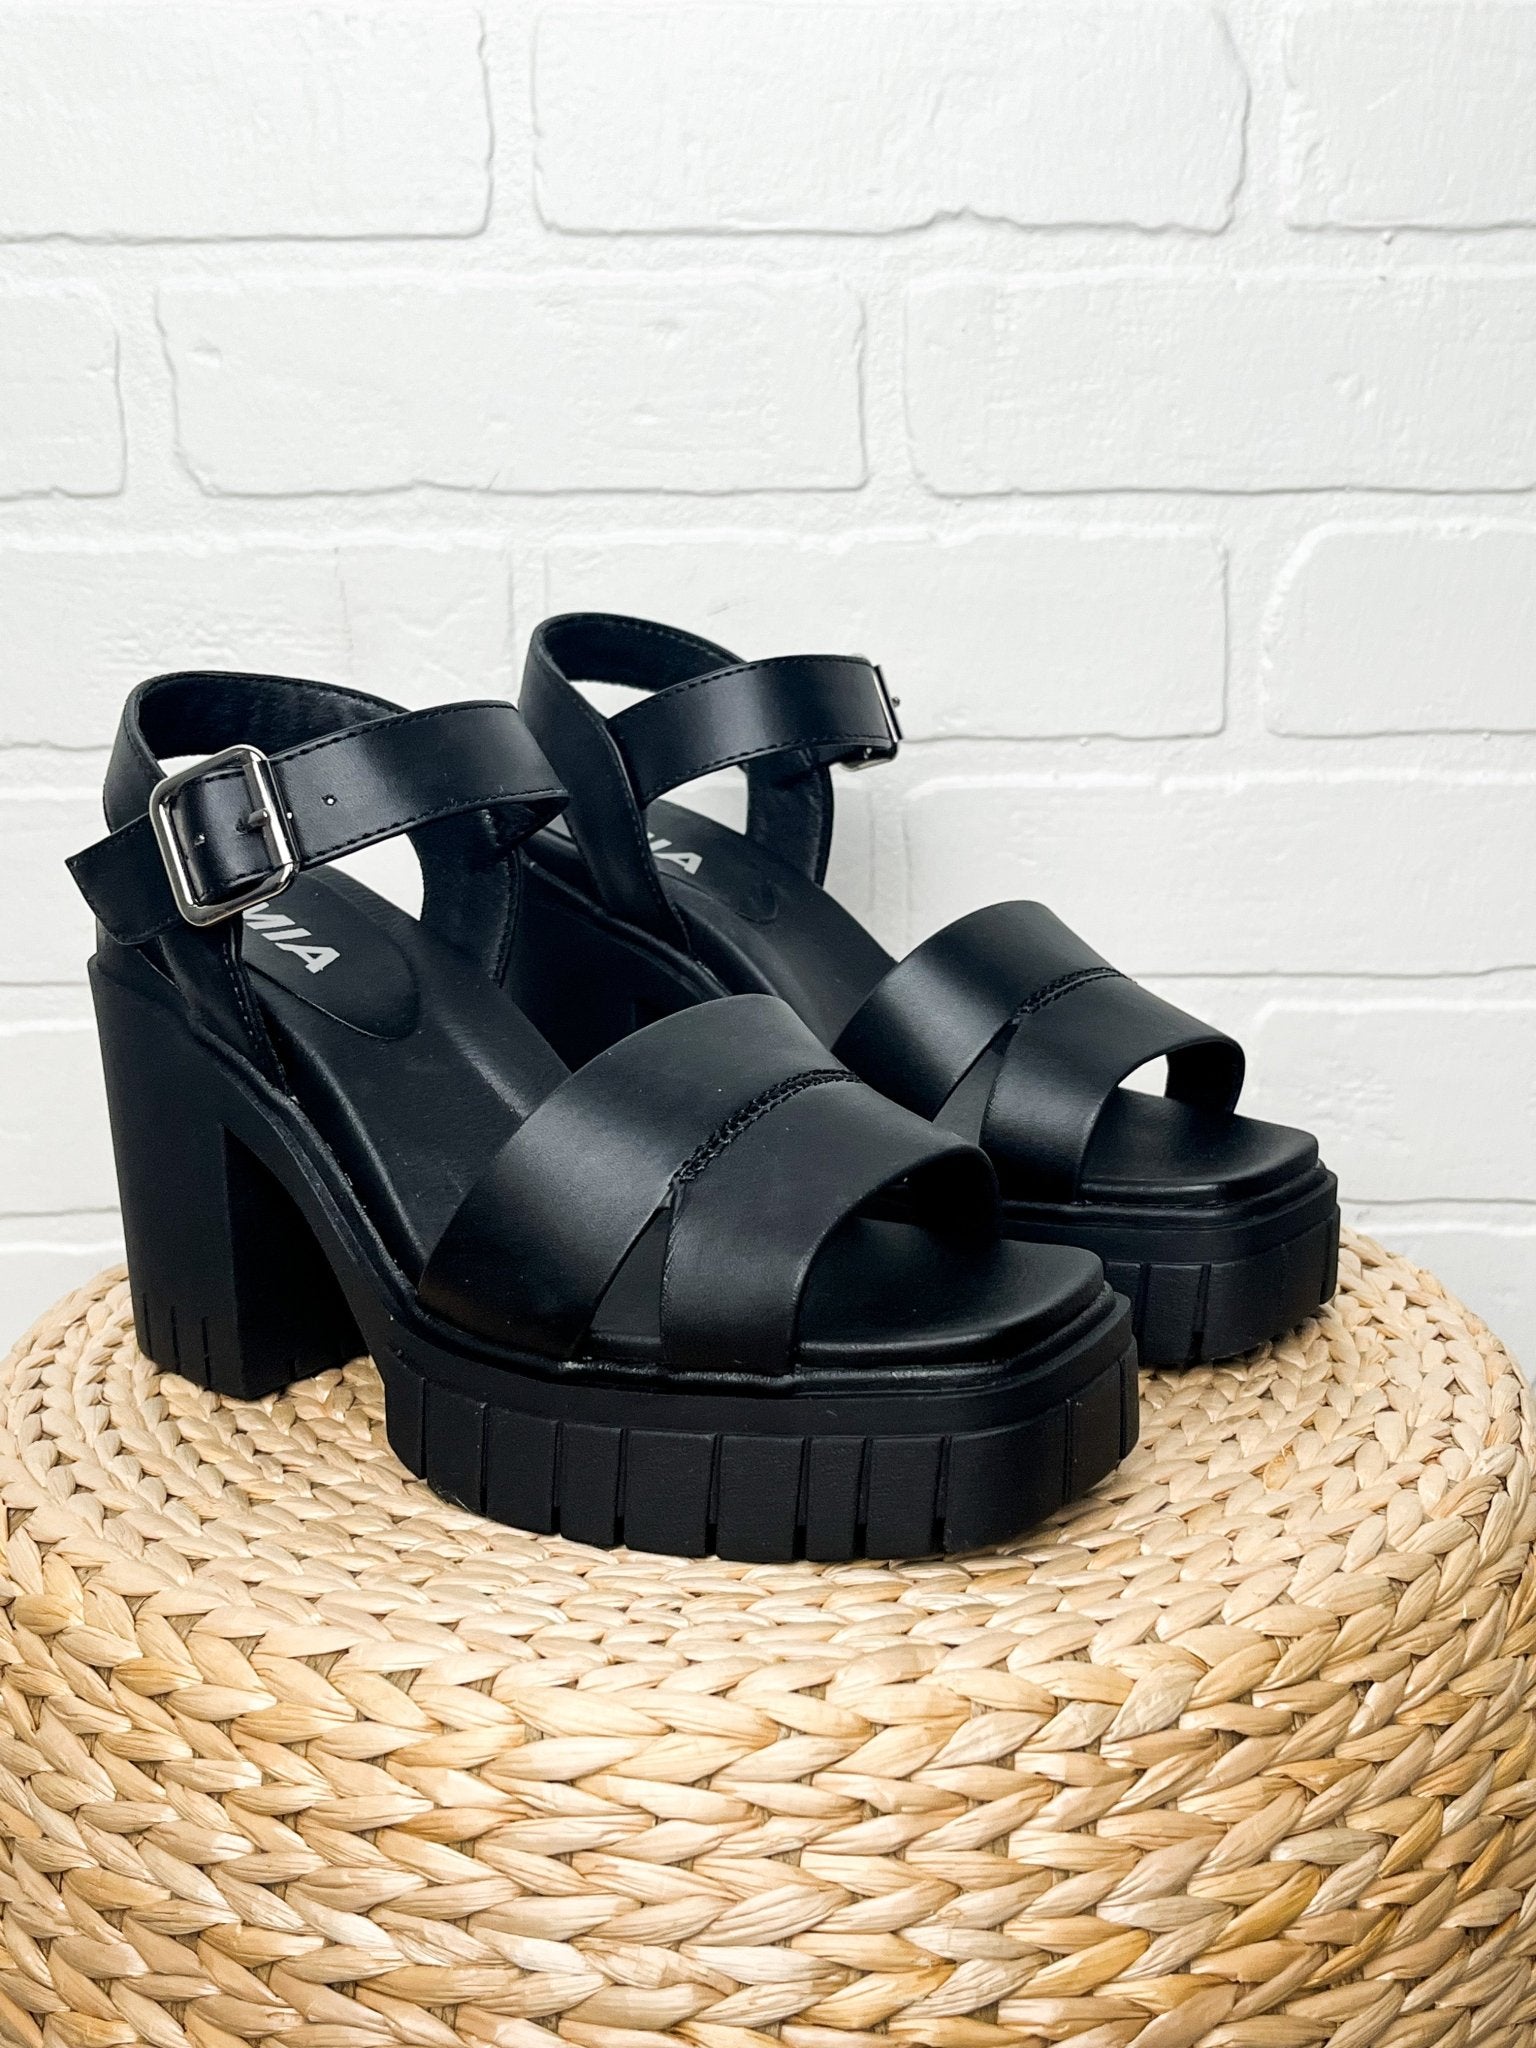 Nivea chunky sandal black - Trendy Shoes - Fashion Shoes at Lush Fashion Lounge Boutique in Oklahoma City